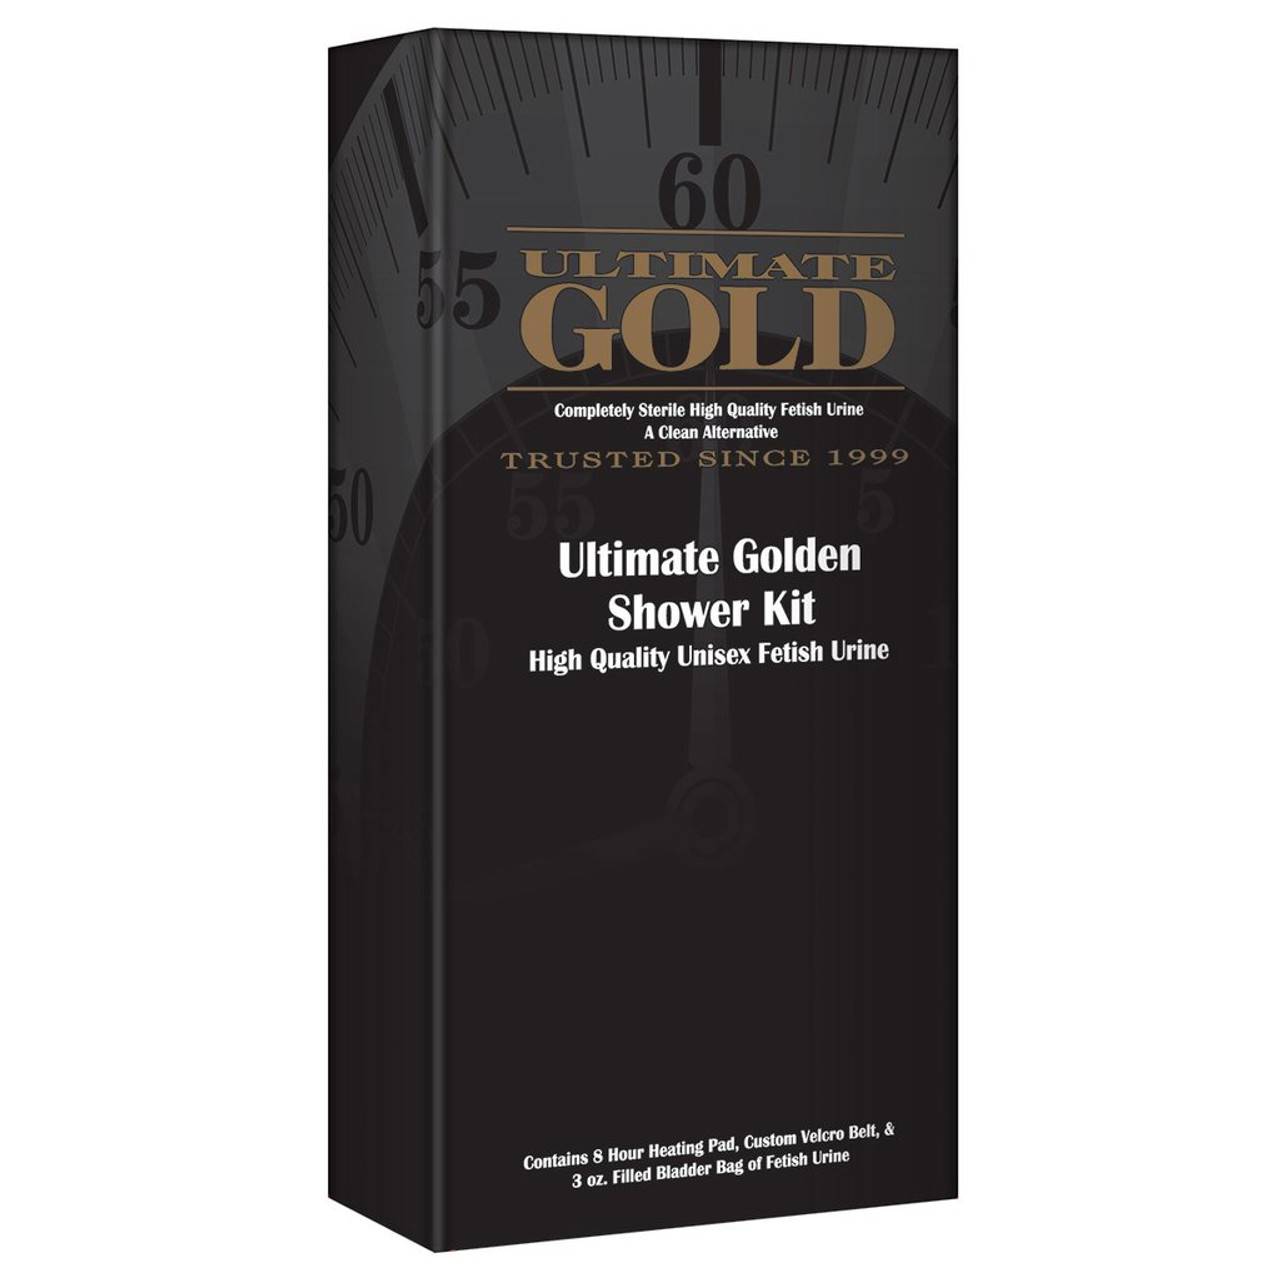 Ultimate Gold High Quality Unisex Fetish Urine Ultimate Golden Shower